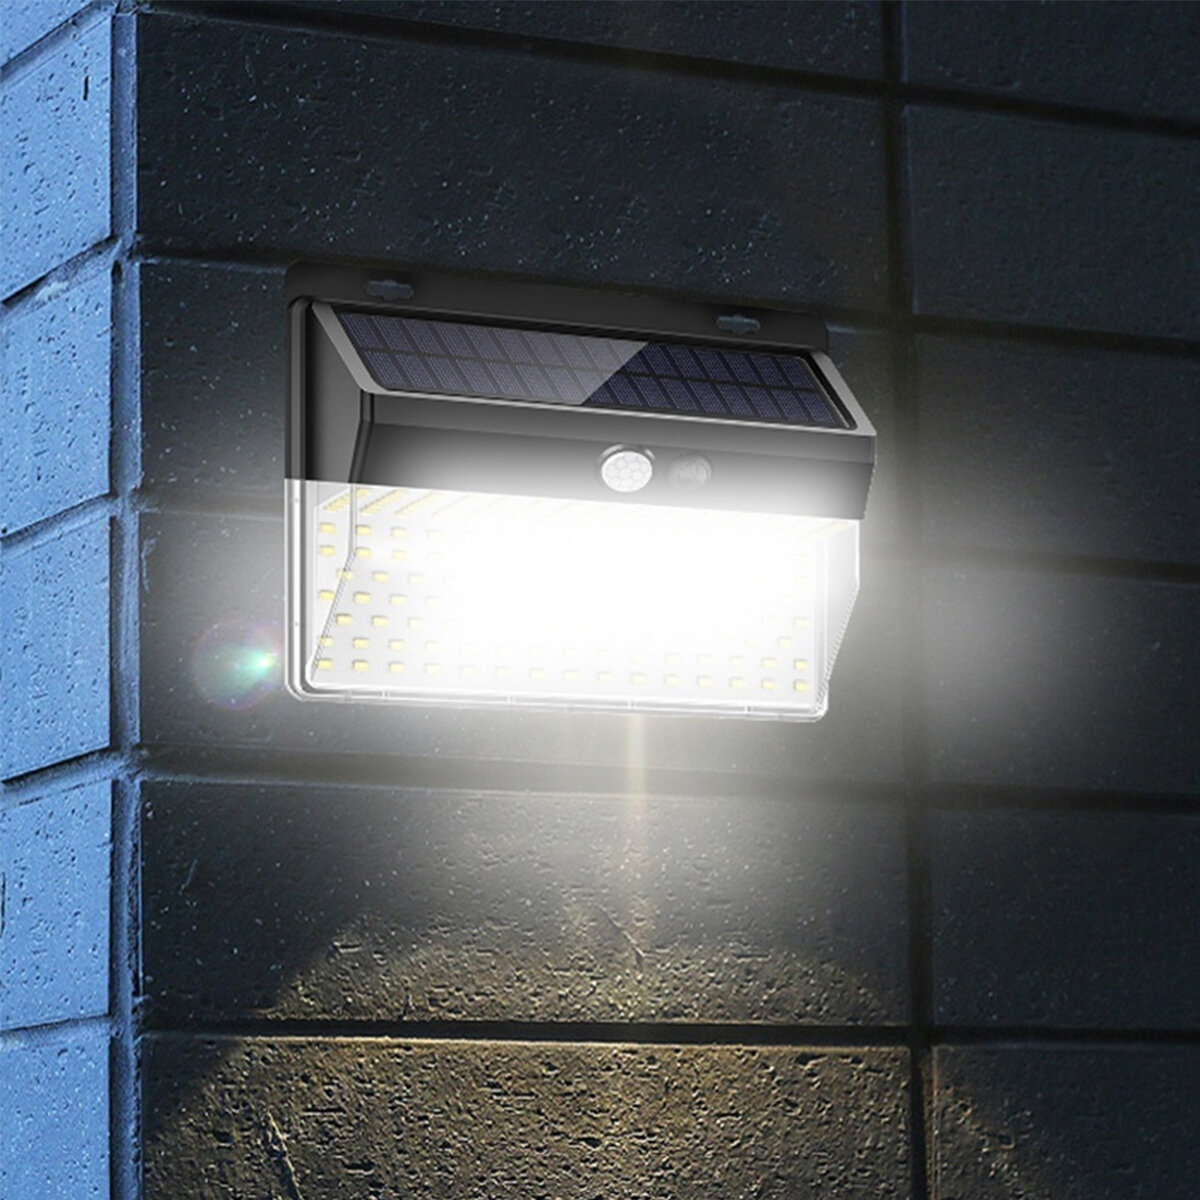 Outdoor 45 LED Solar Power Wall Light PIR Motion Sensor 3 Modes Garden Yard Lamp 